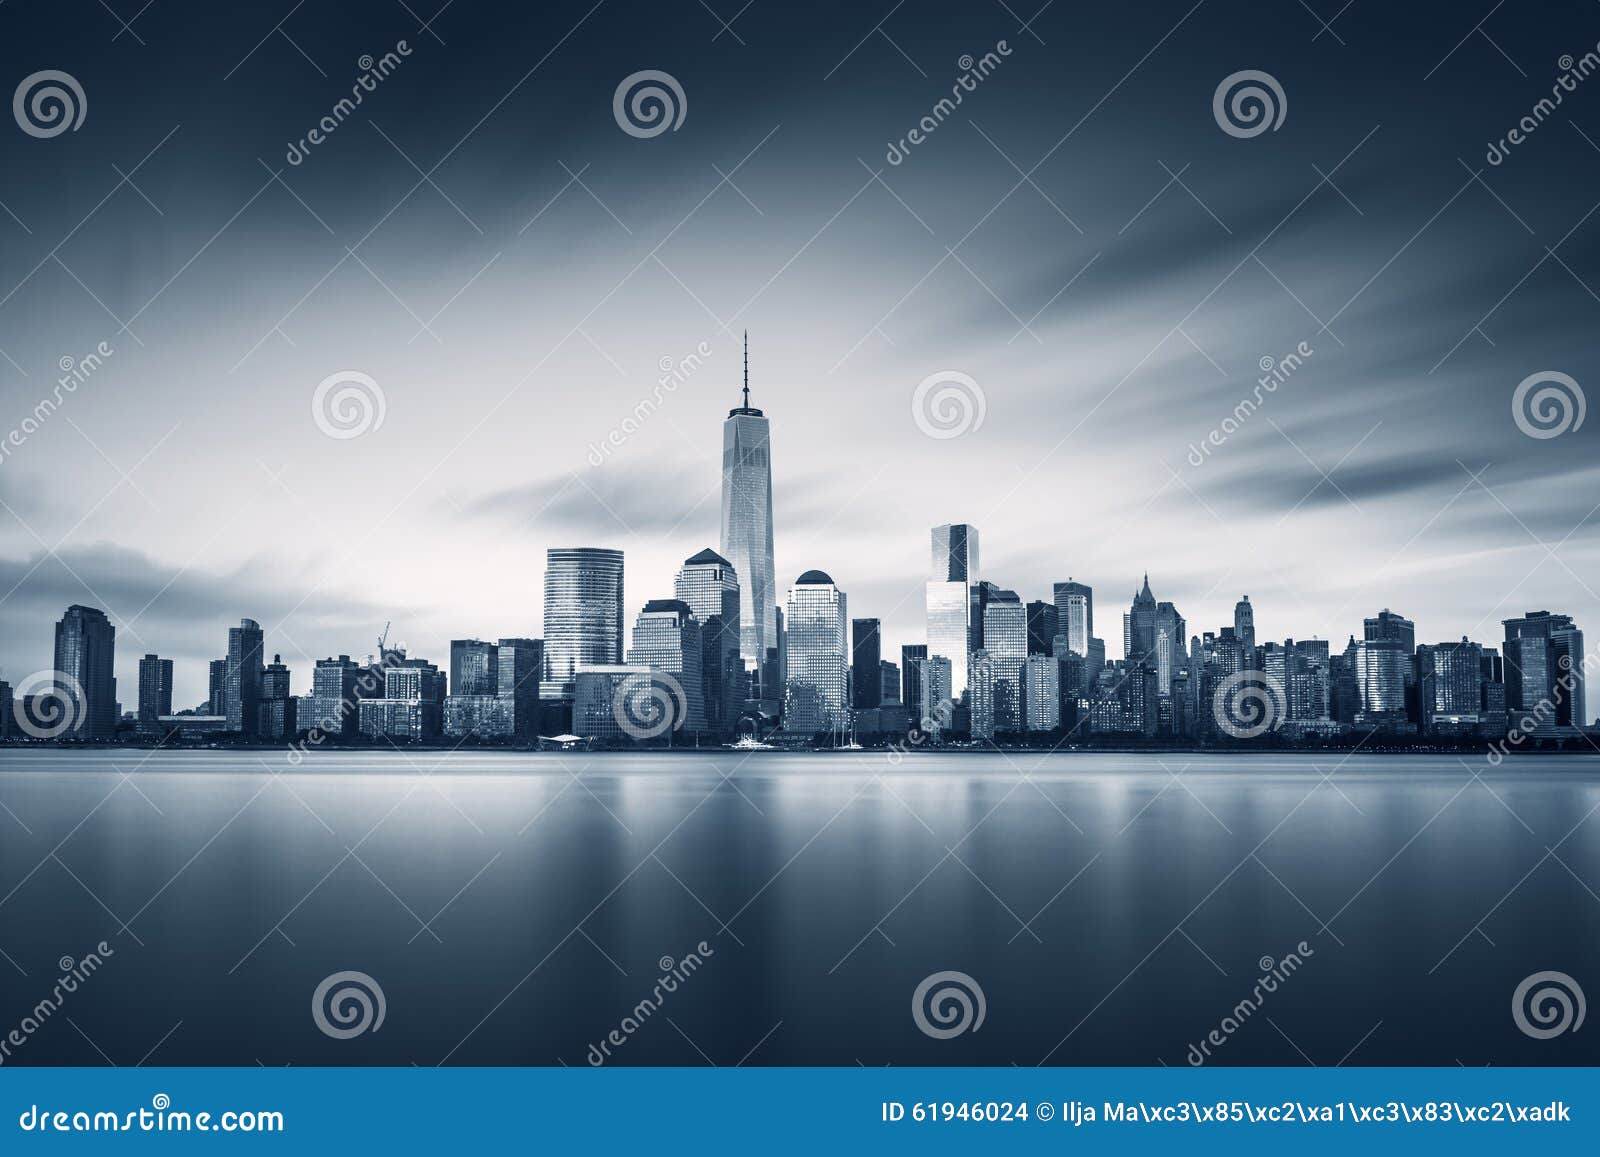 new york city lower manhattan with new one world trade center